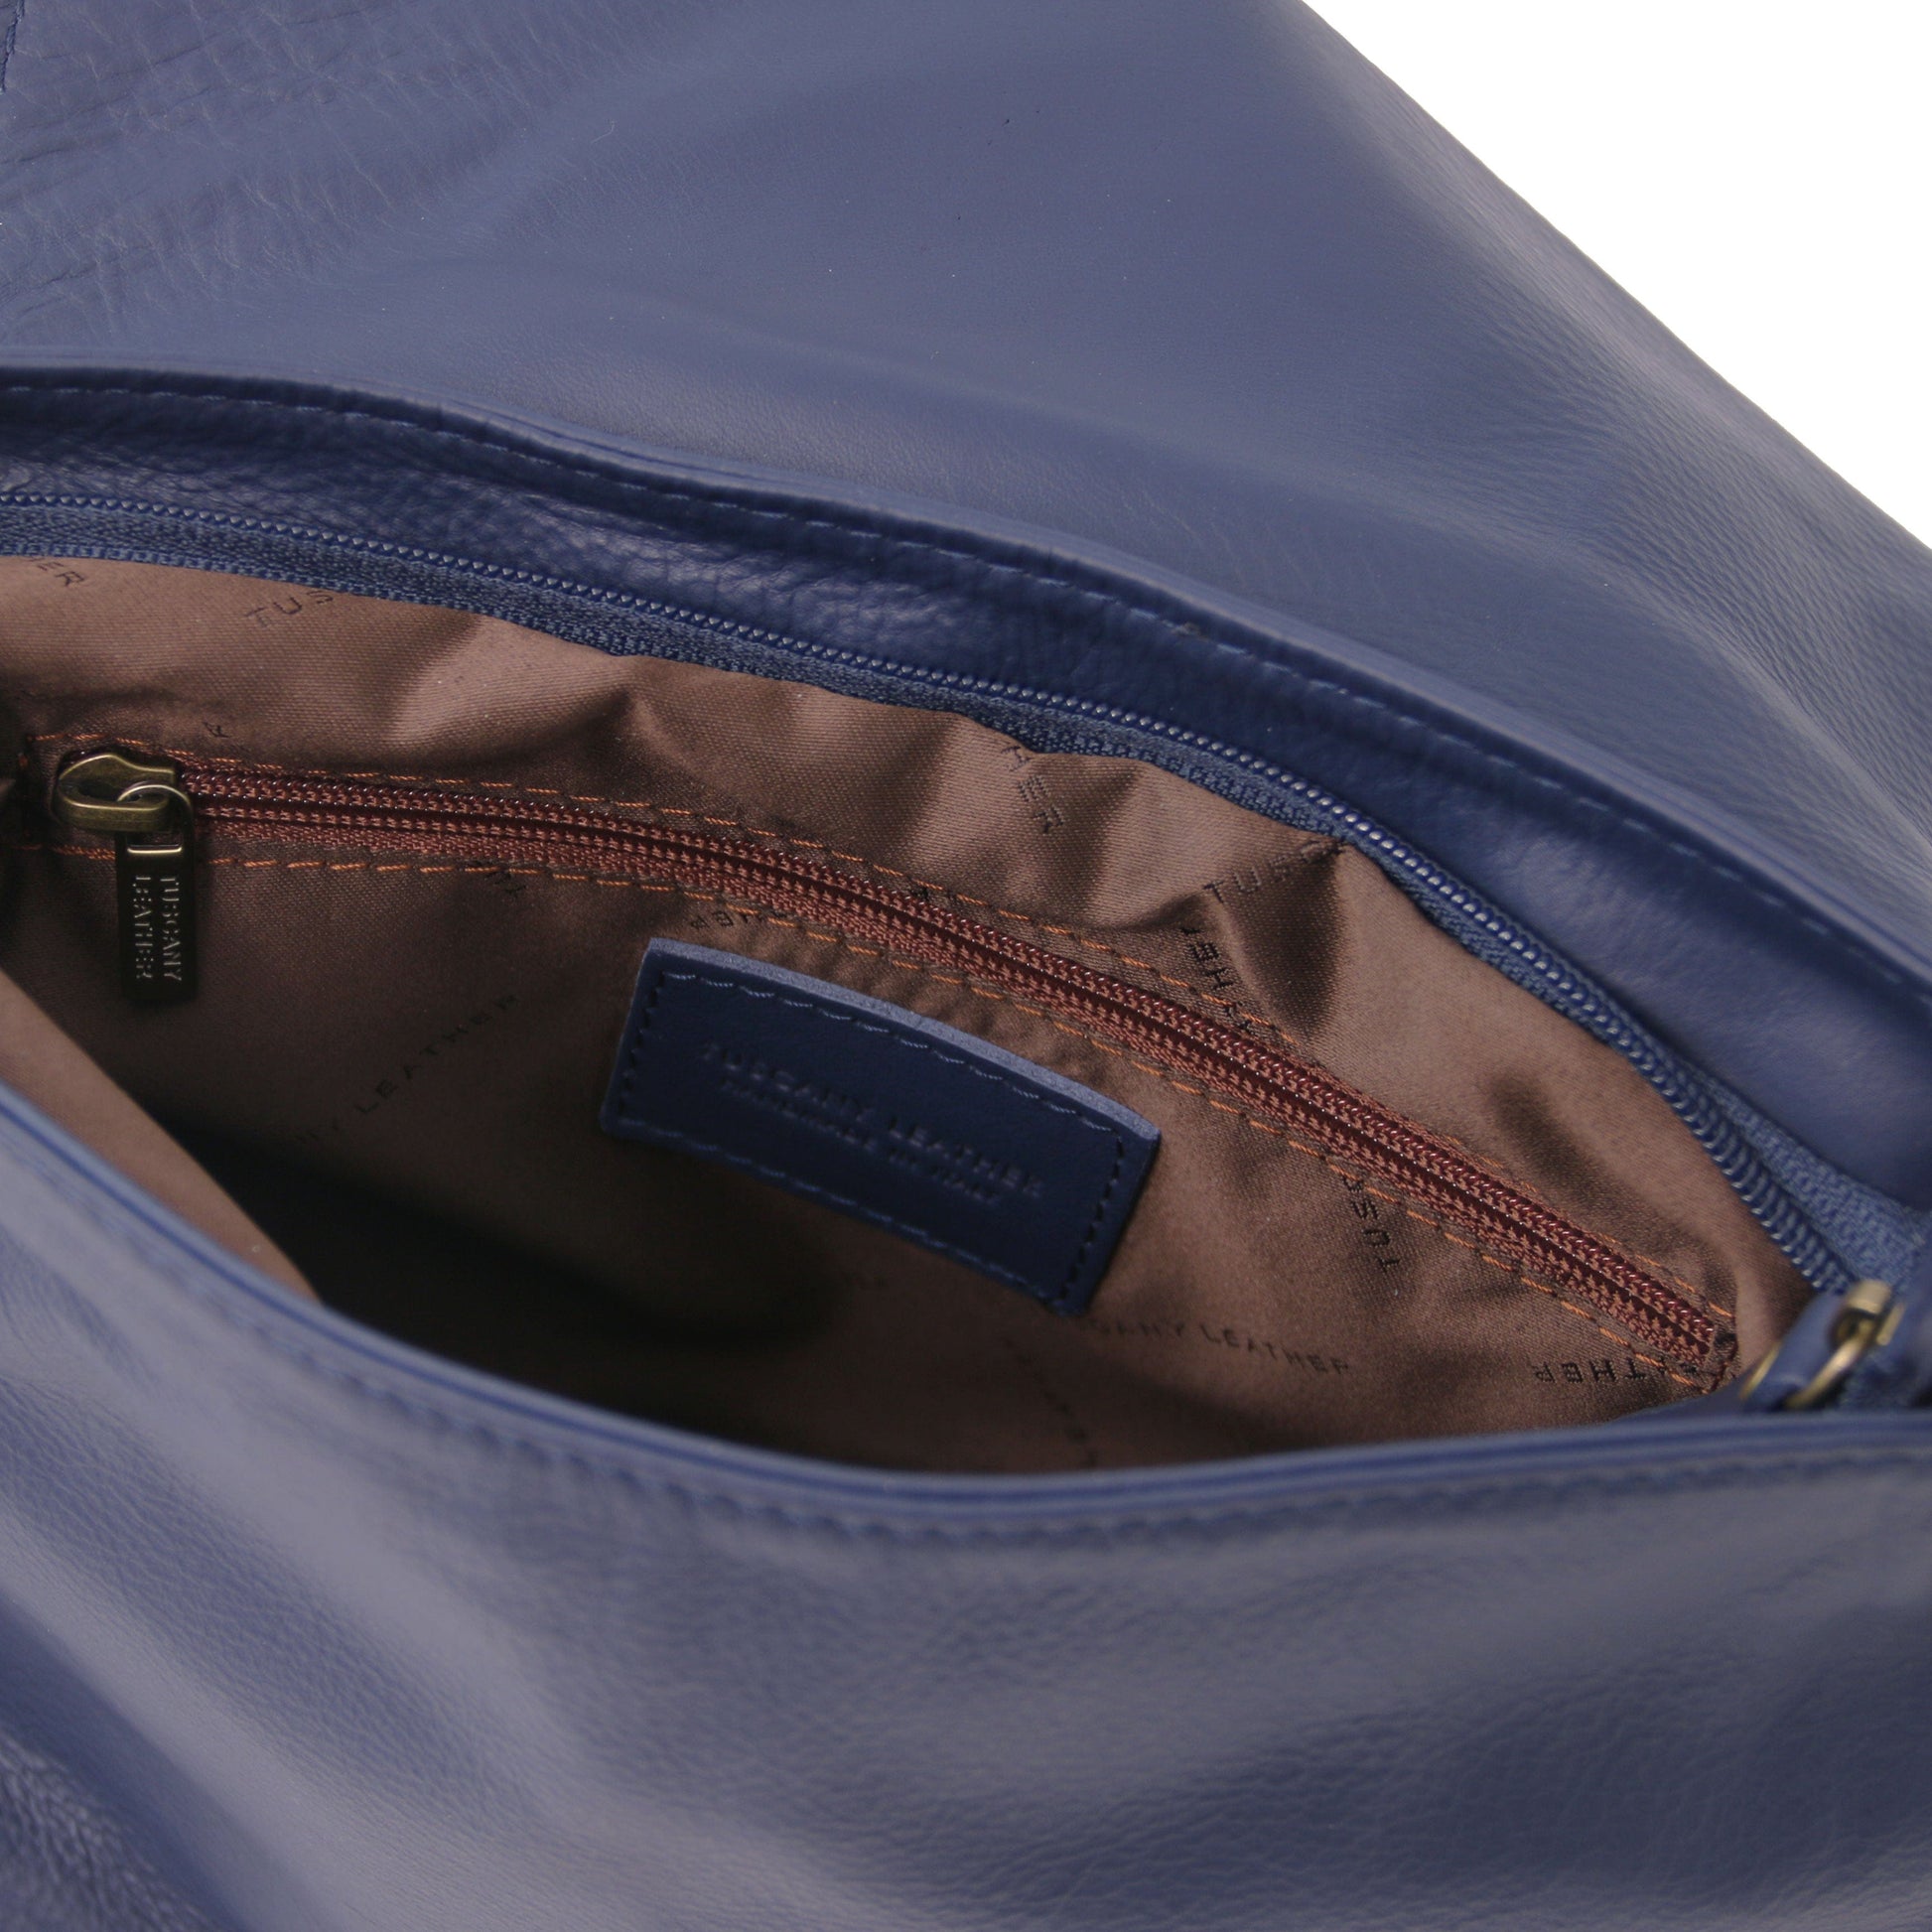 TL Bag - Soft leather shoulder bag with tassel detail | TL141223 - Premium Leather shoulder bags - Just €109.80! Shop now at San Rocco Italia